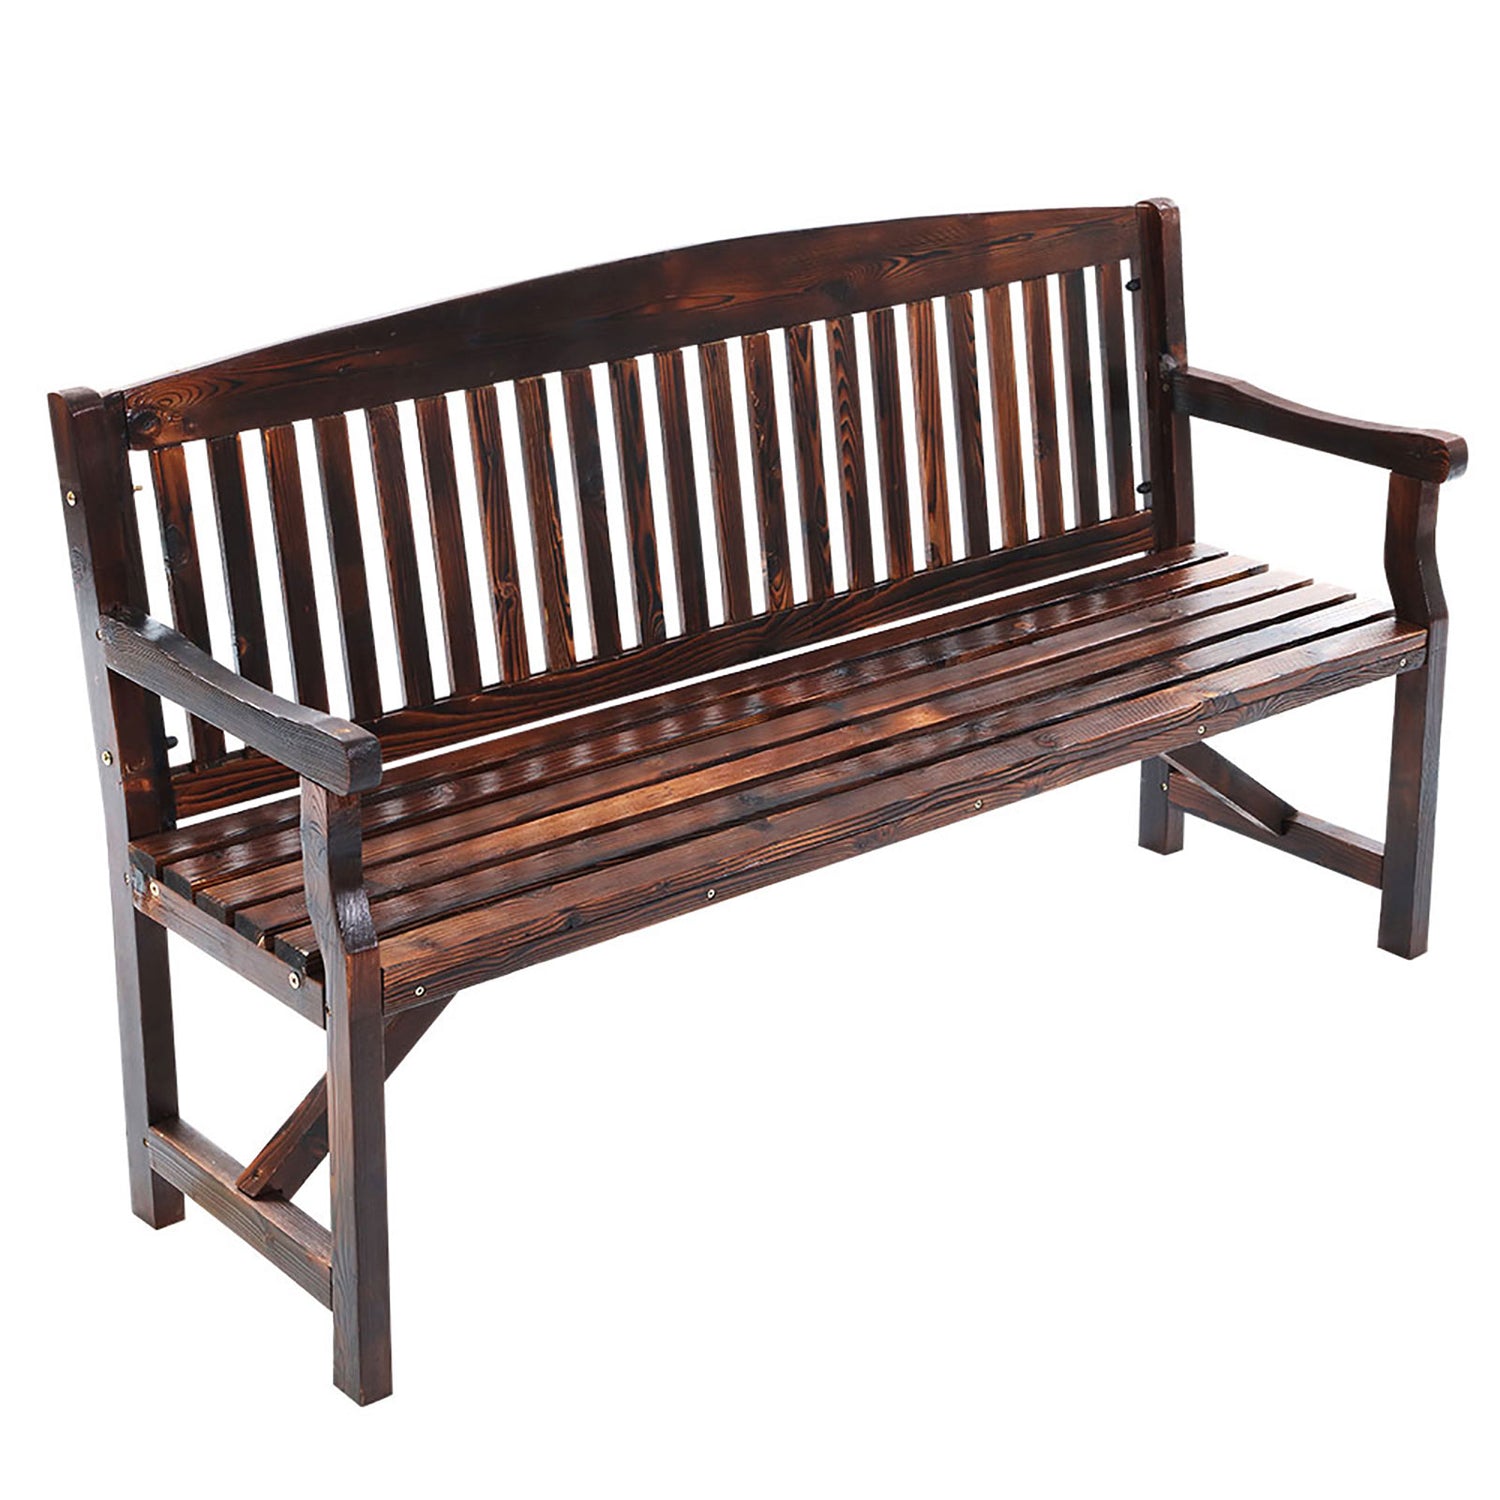 Gardeon Wooden Garden Bench Chair Natural Outdoor Furniture Décor Patio Deck 3 Seater-Furniture &gt; Outdoor-PEROZ Accessories